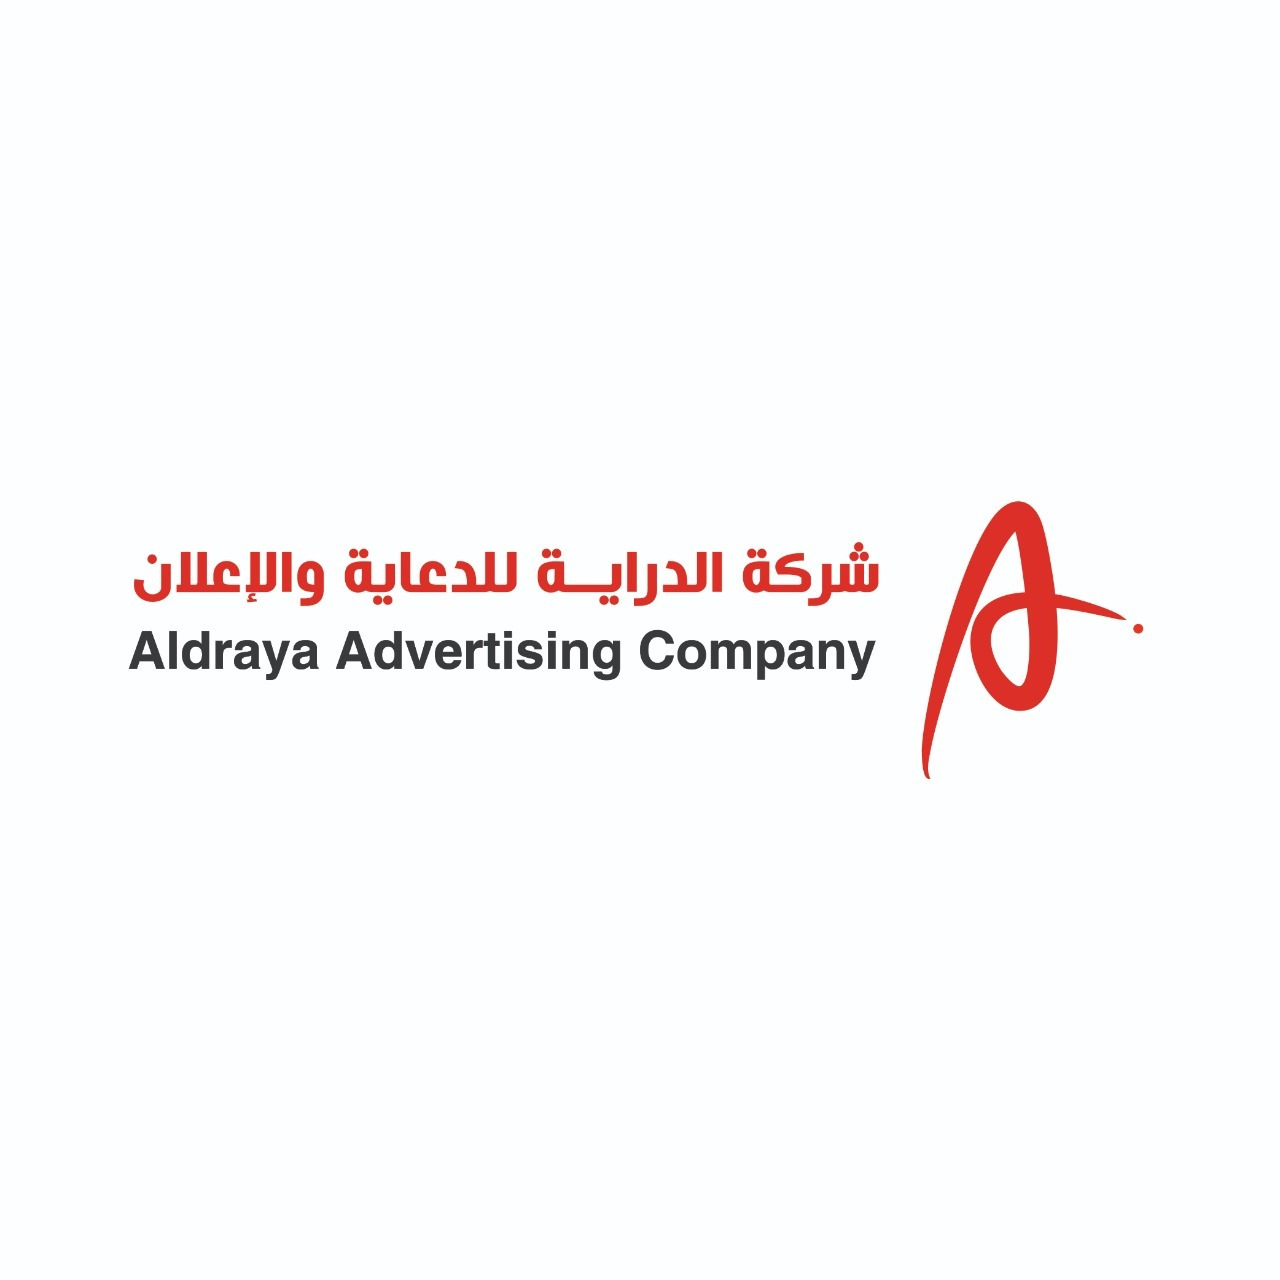 Aldraya Advertising Company